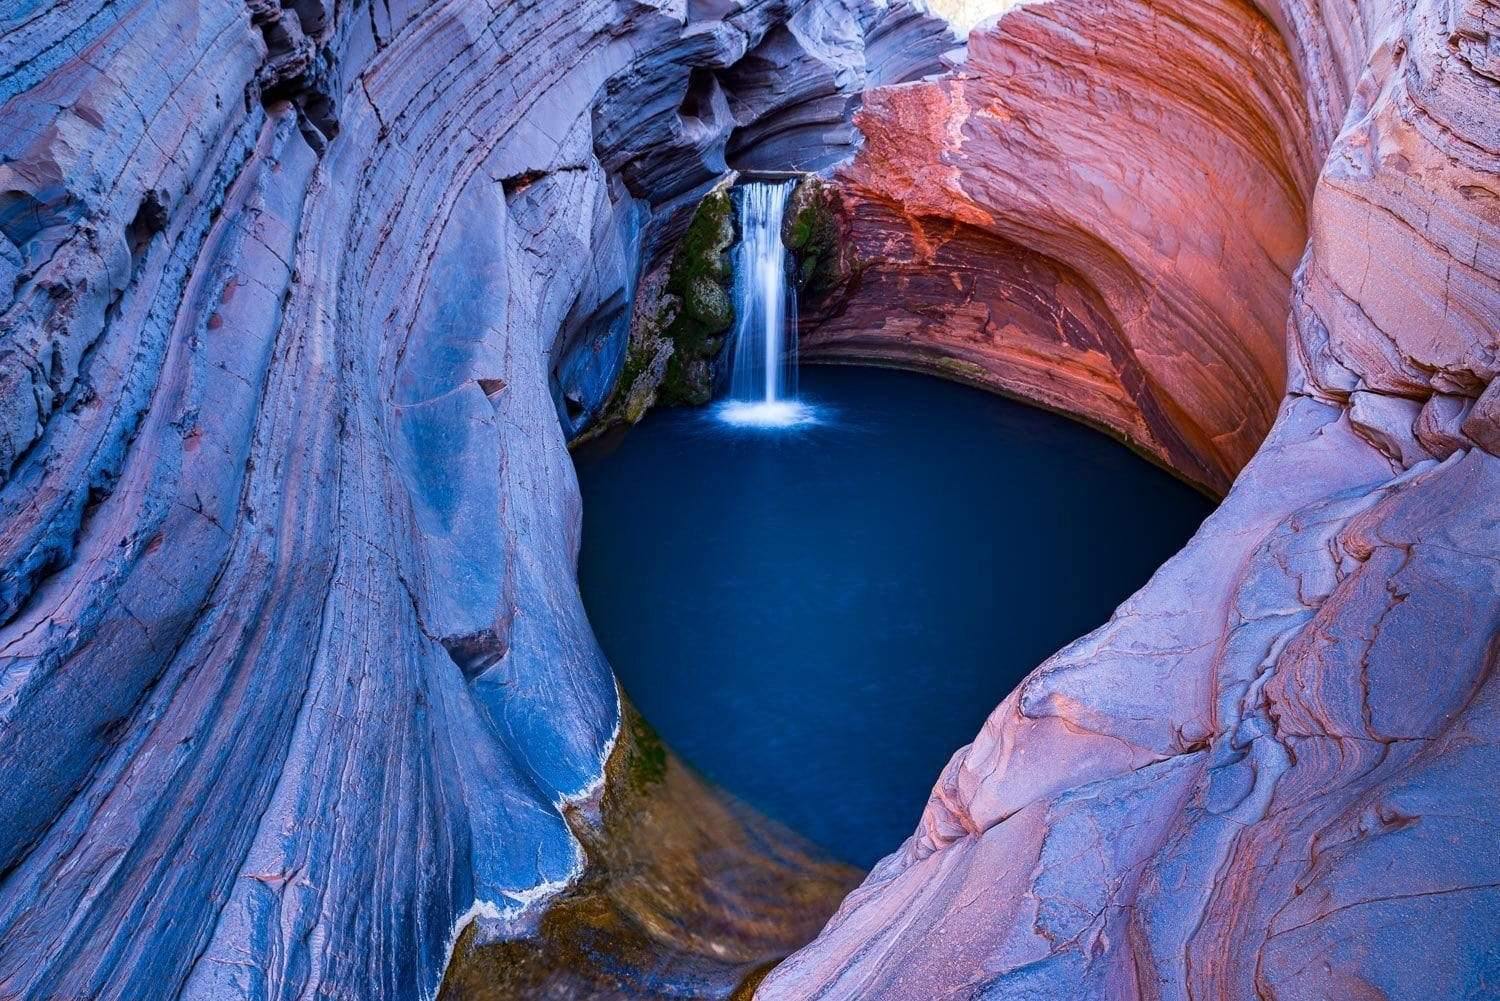 A deep natural pool below the high mountain walls, Spa Pool - Karijini, The Pilbara